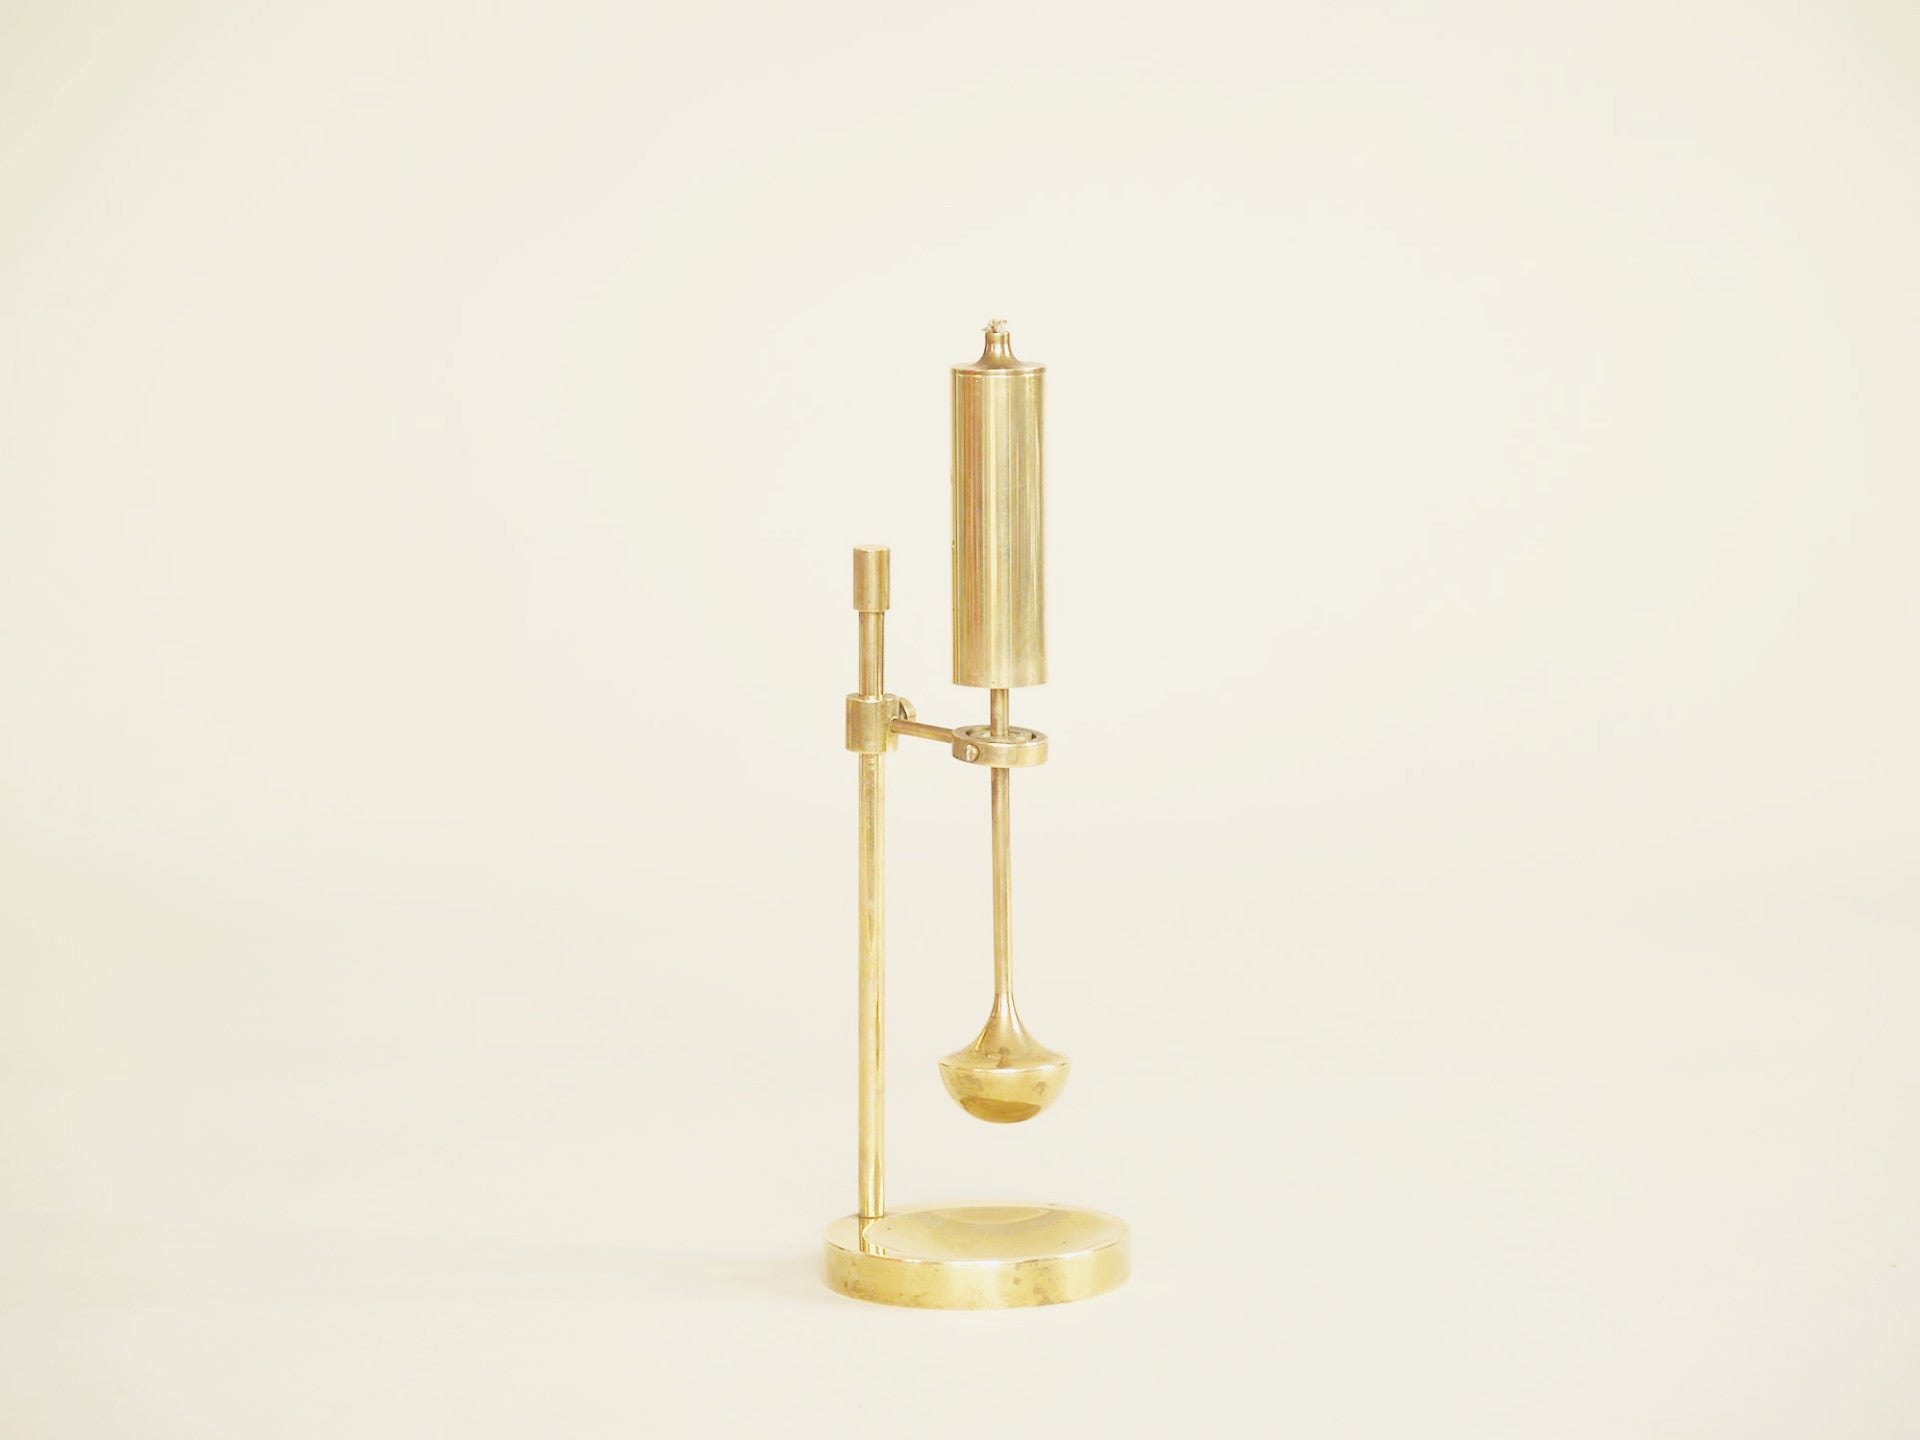 Lampe à huile / bougeoir gyroscopique "Copenhagen" de Ilse D. Ammonsen, Danemark (vers 1950)..Gyro Oil lamp / Candle holder "Copenhagen" by Ilse D. Ammonsen, Denmark (circa 1950)